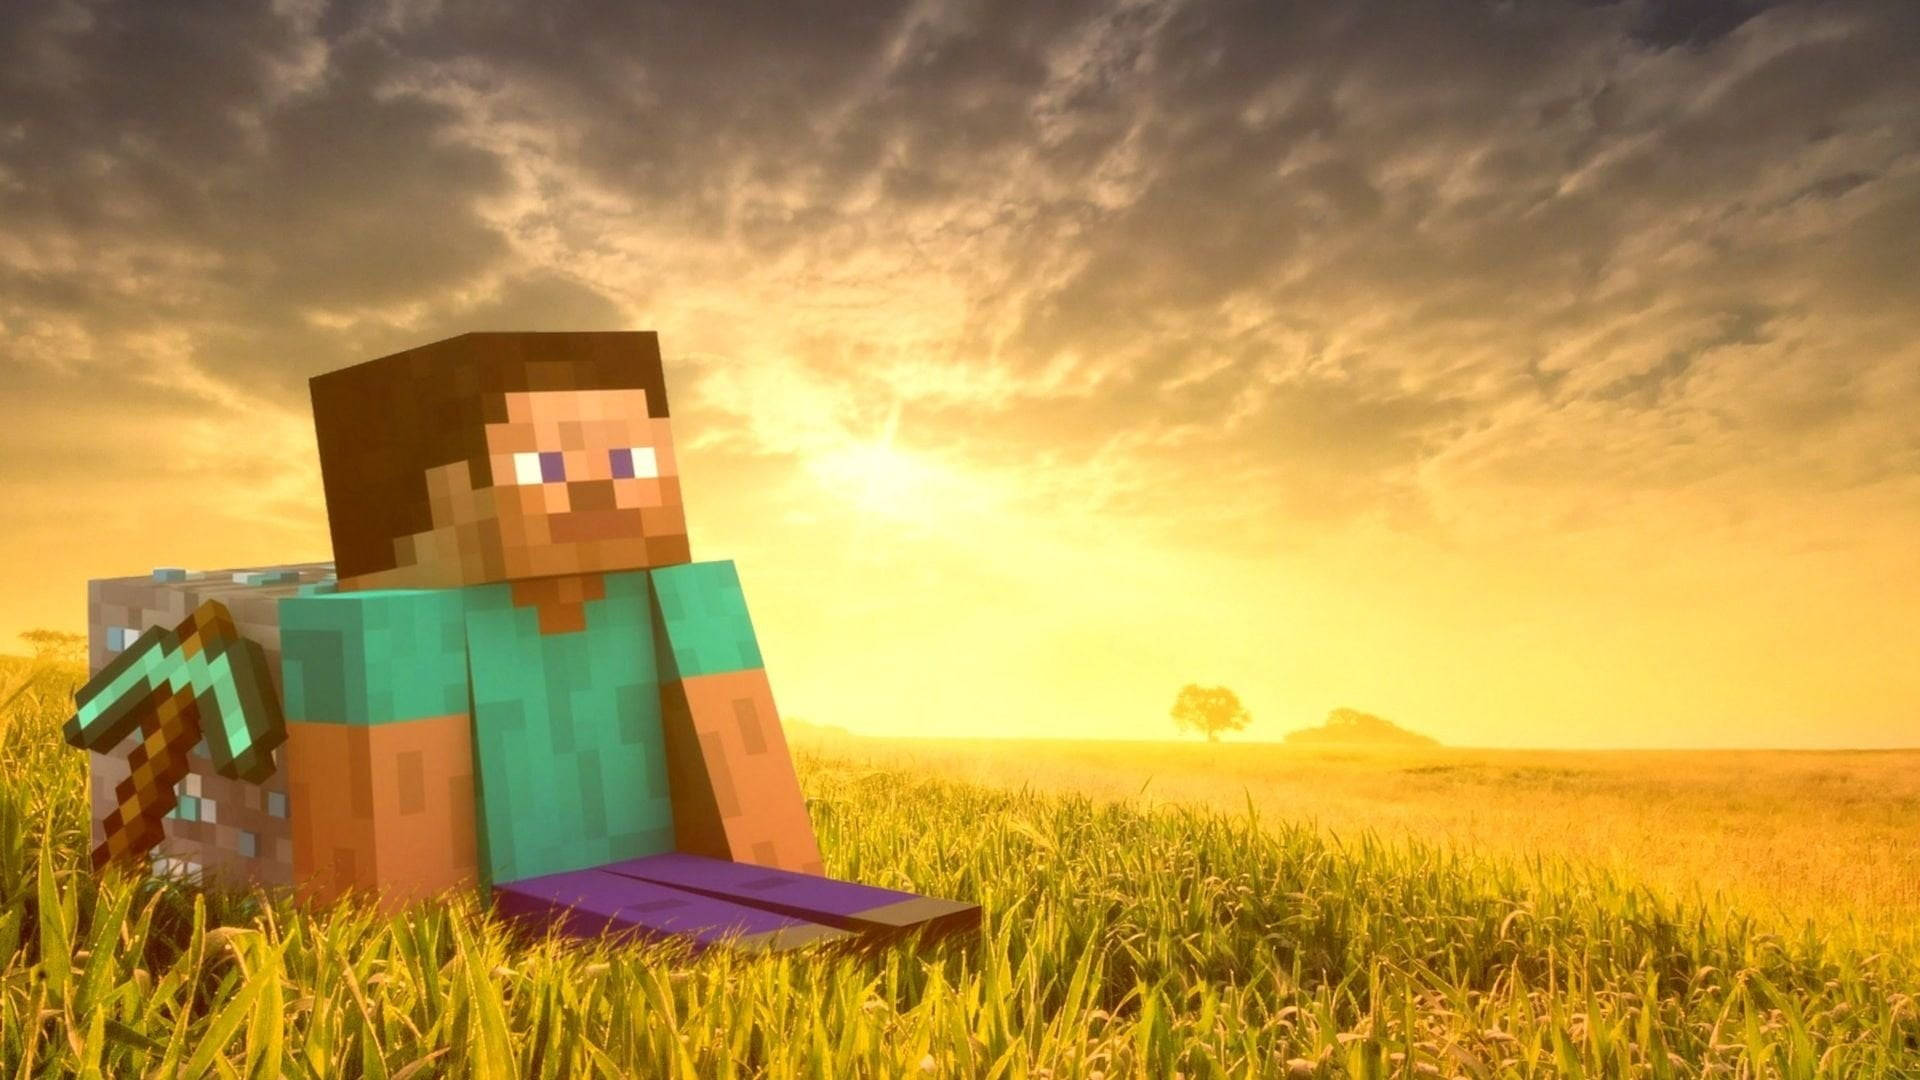 Steve Watching Sunset In Minecraft Landscape Wallpaper